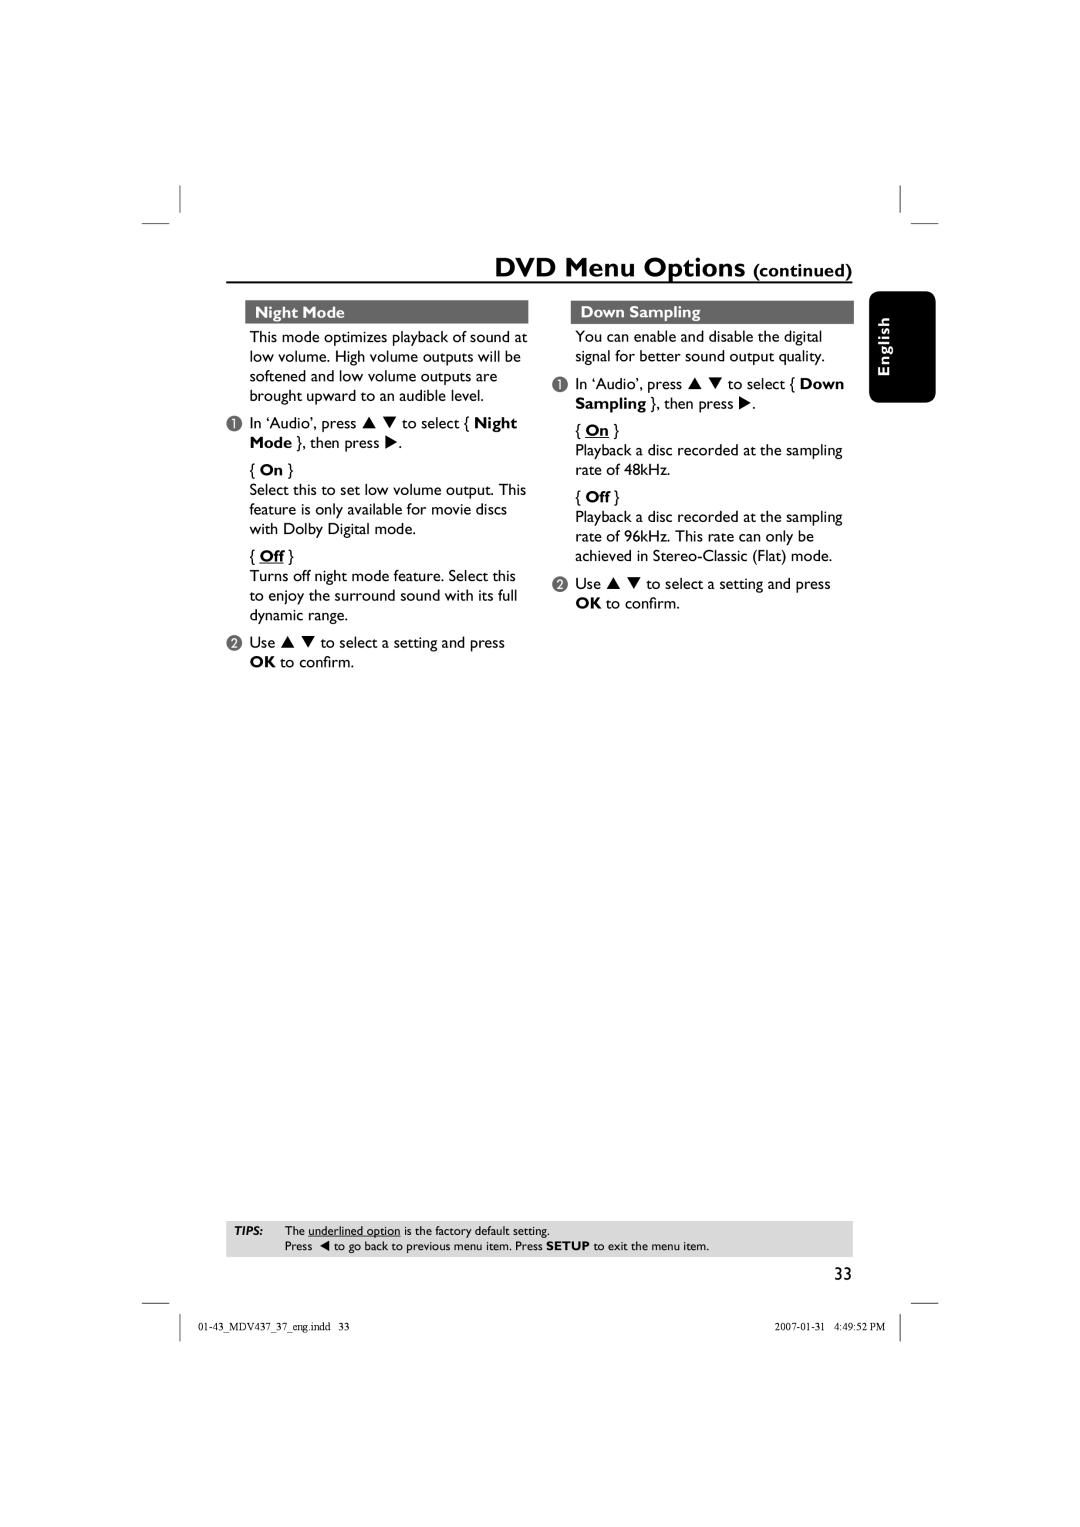 Magnavox MDV437 manual Night Mode, Down Sampling, DVD Menu Options continued, English 